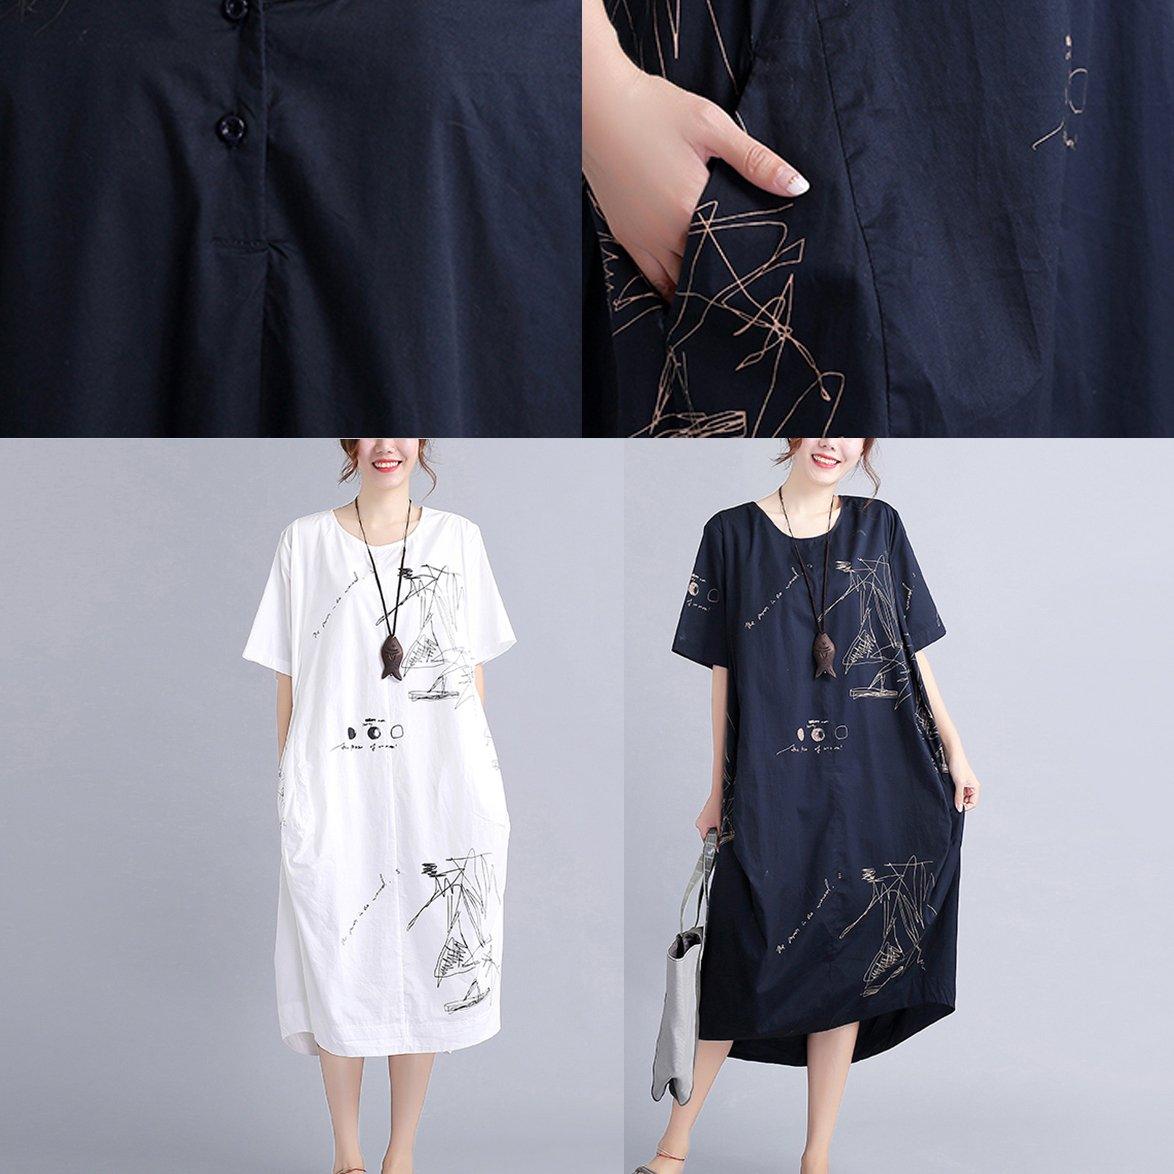 New black linen knee dressoversized linen clothing dress 2018short sleeve prints linen cotton dress - Omychic